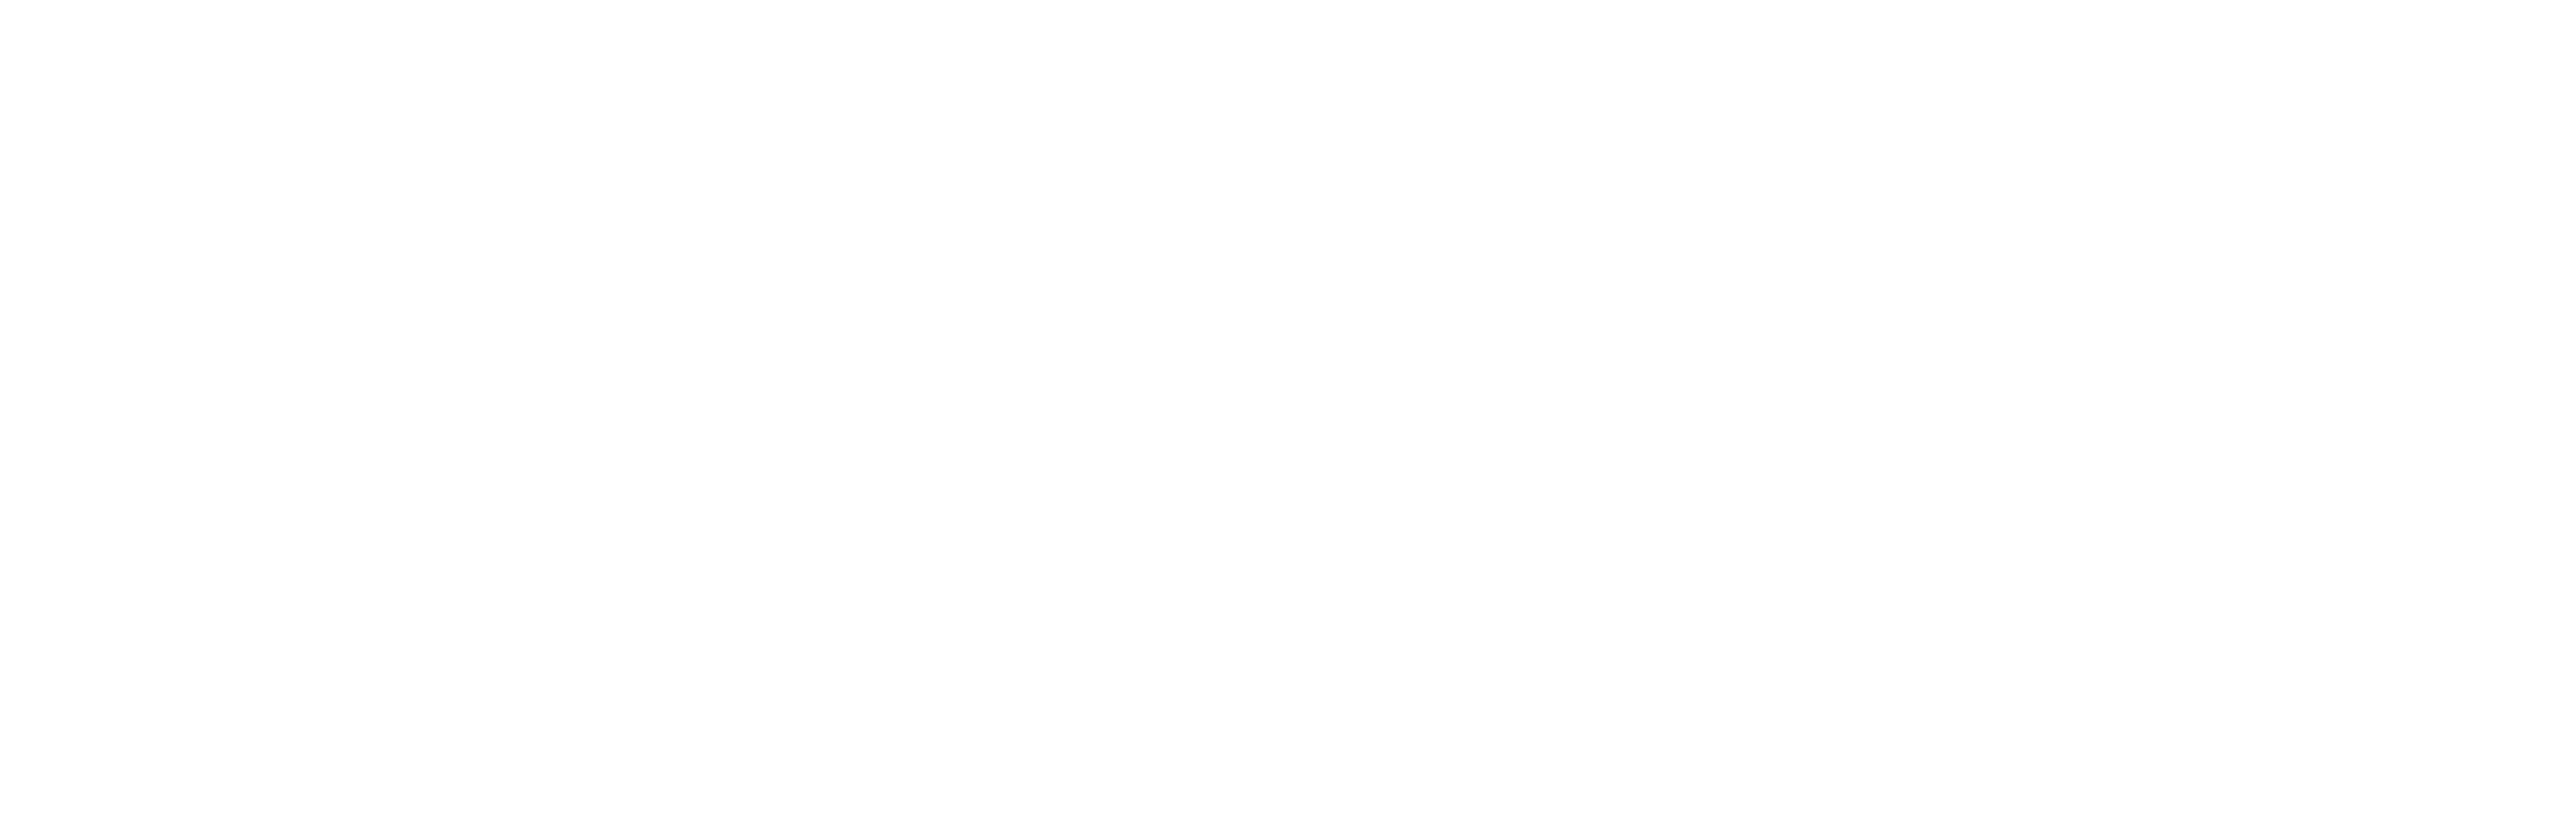 https://www.saastock.com/wp-content/uploads/2020/09/Kiss-Platform-logo.png